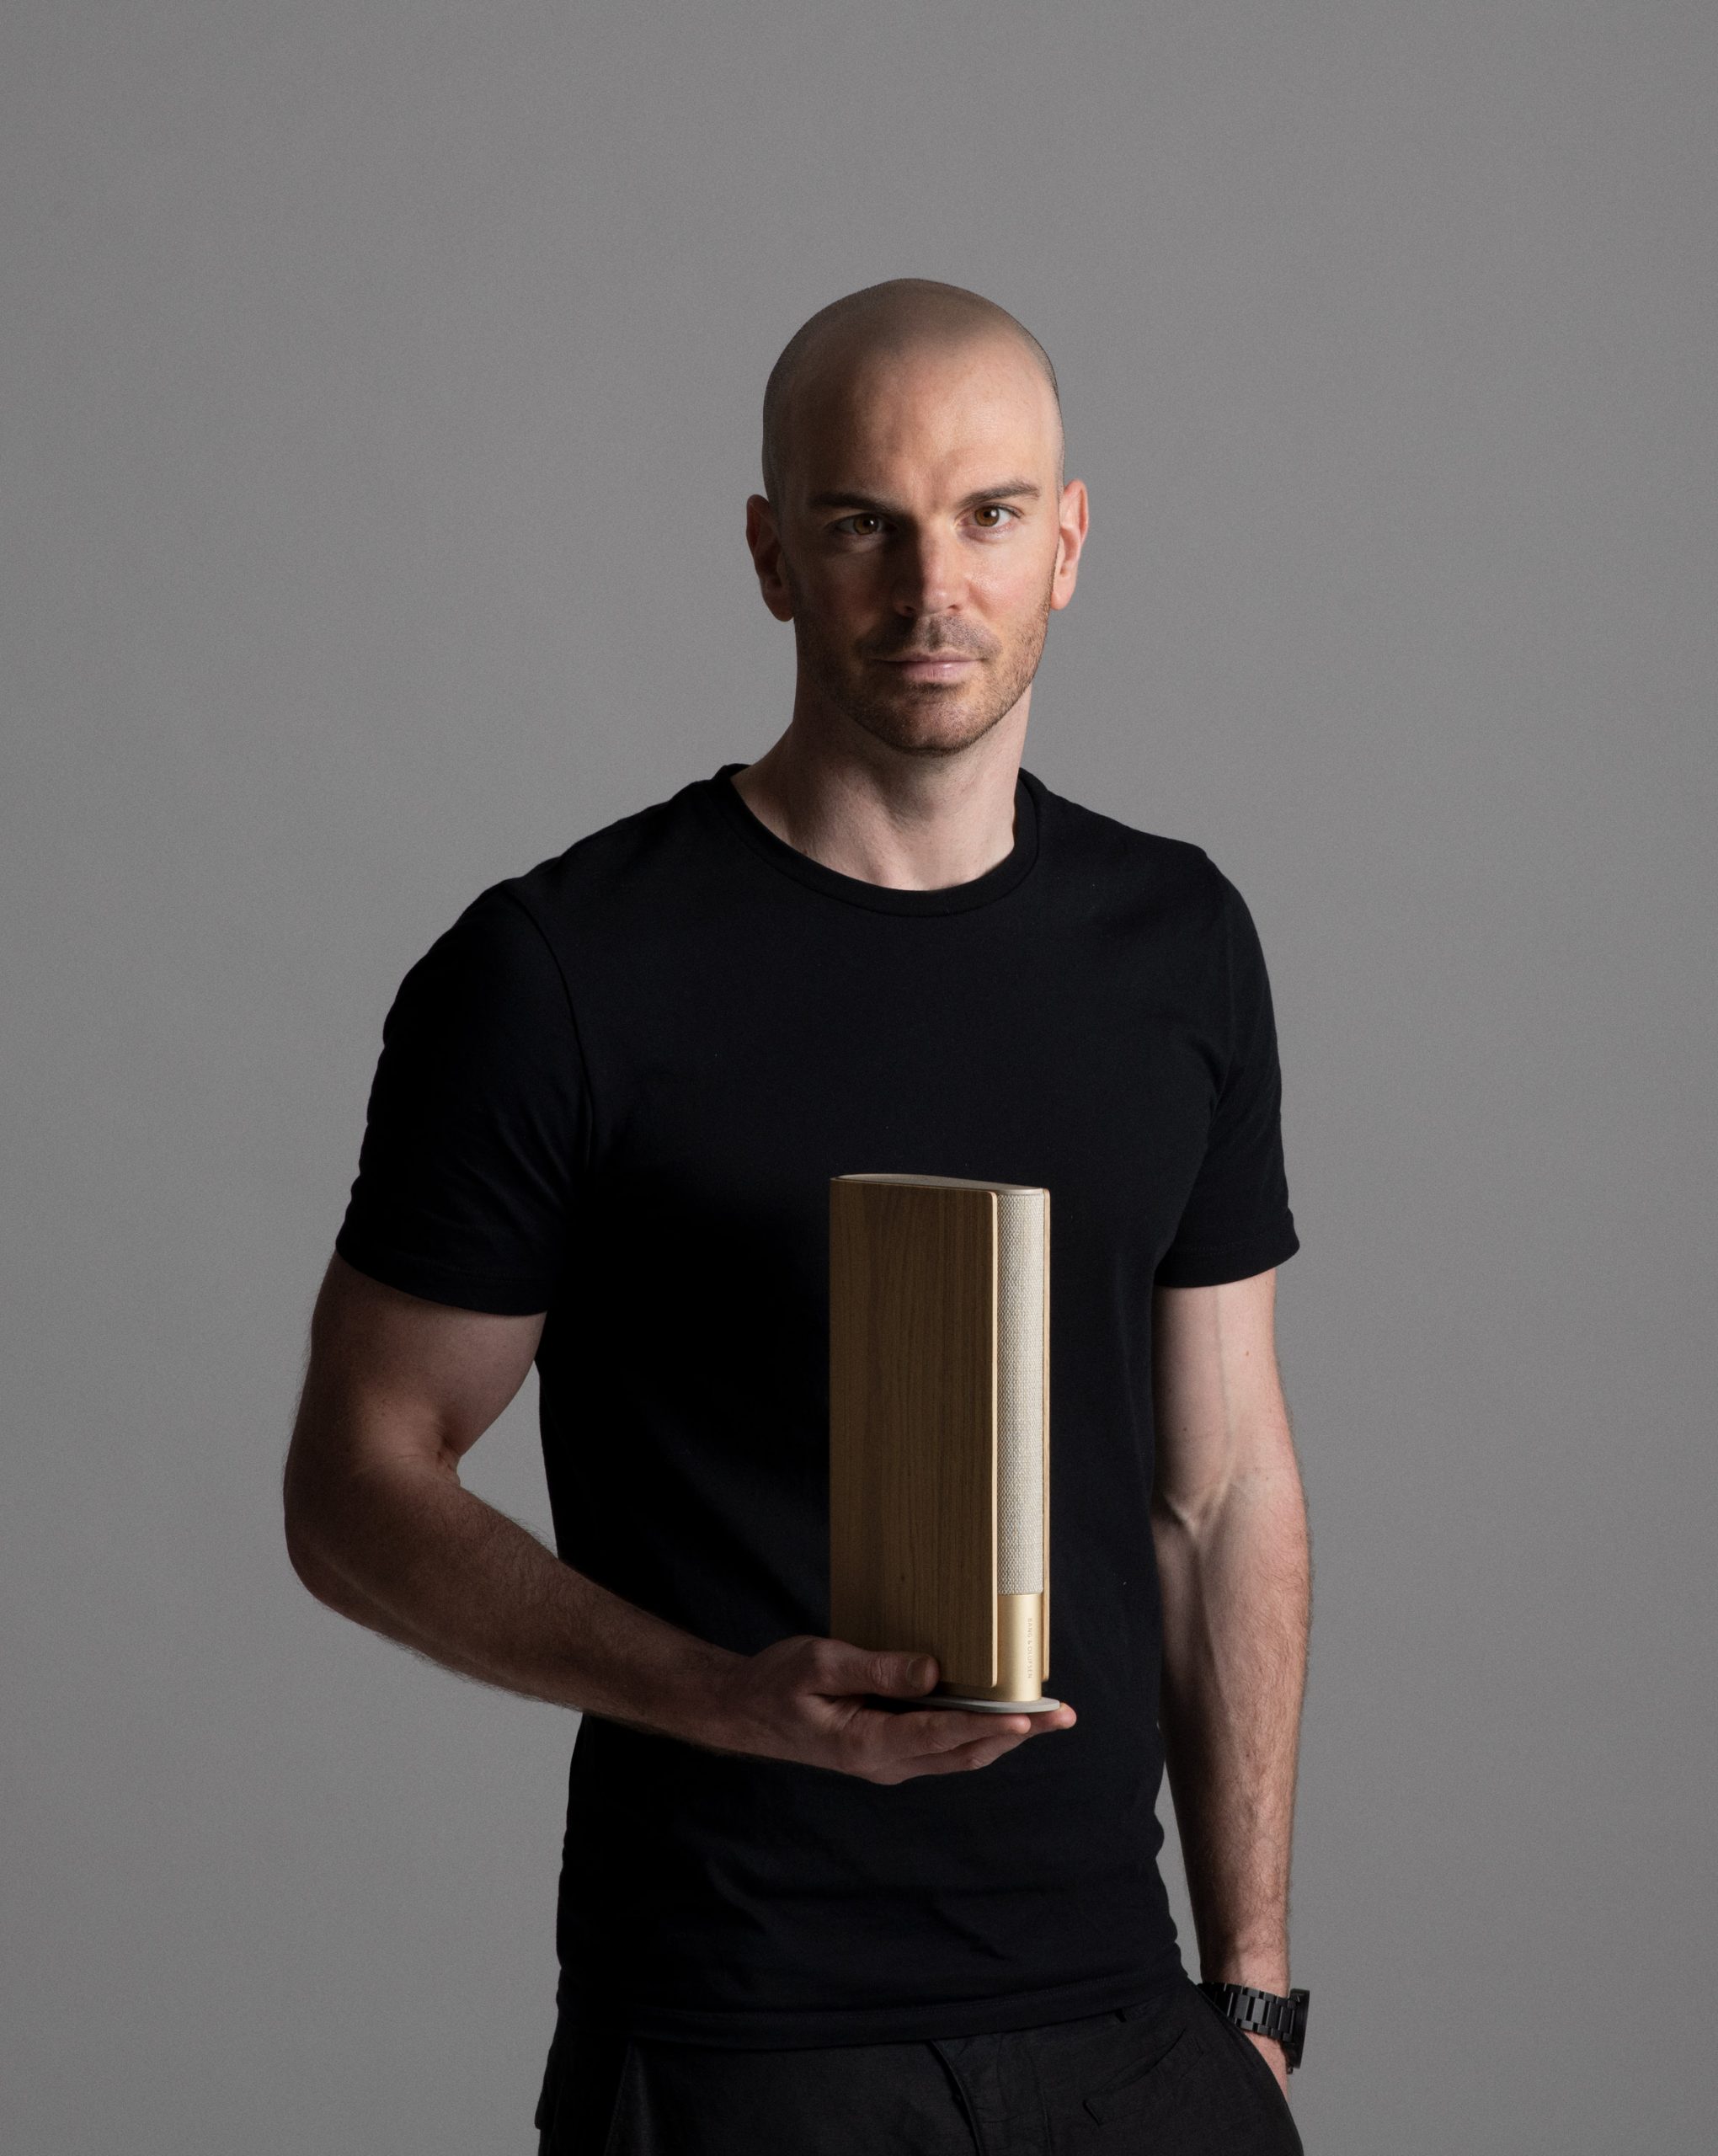 Layer creates slim Beosound Emerge bookshelf speaker for Bang & Olufsen